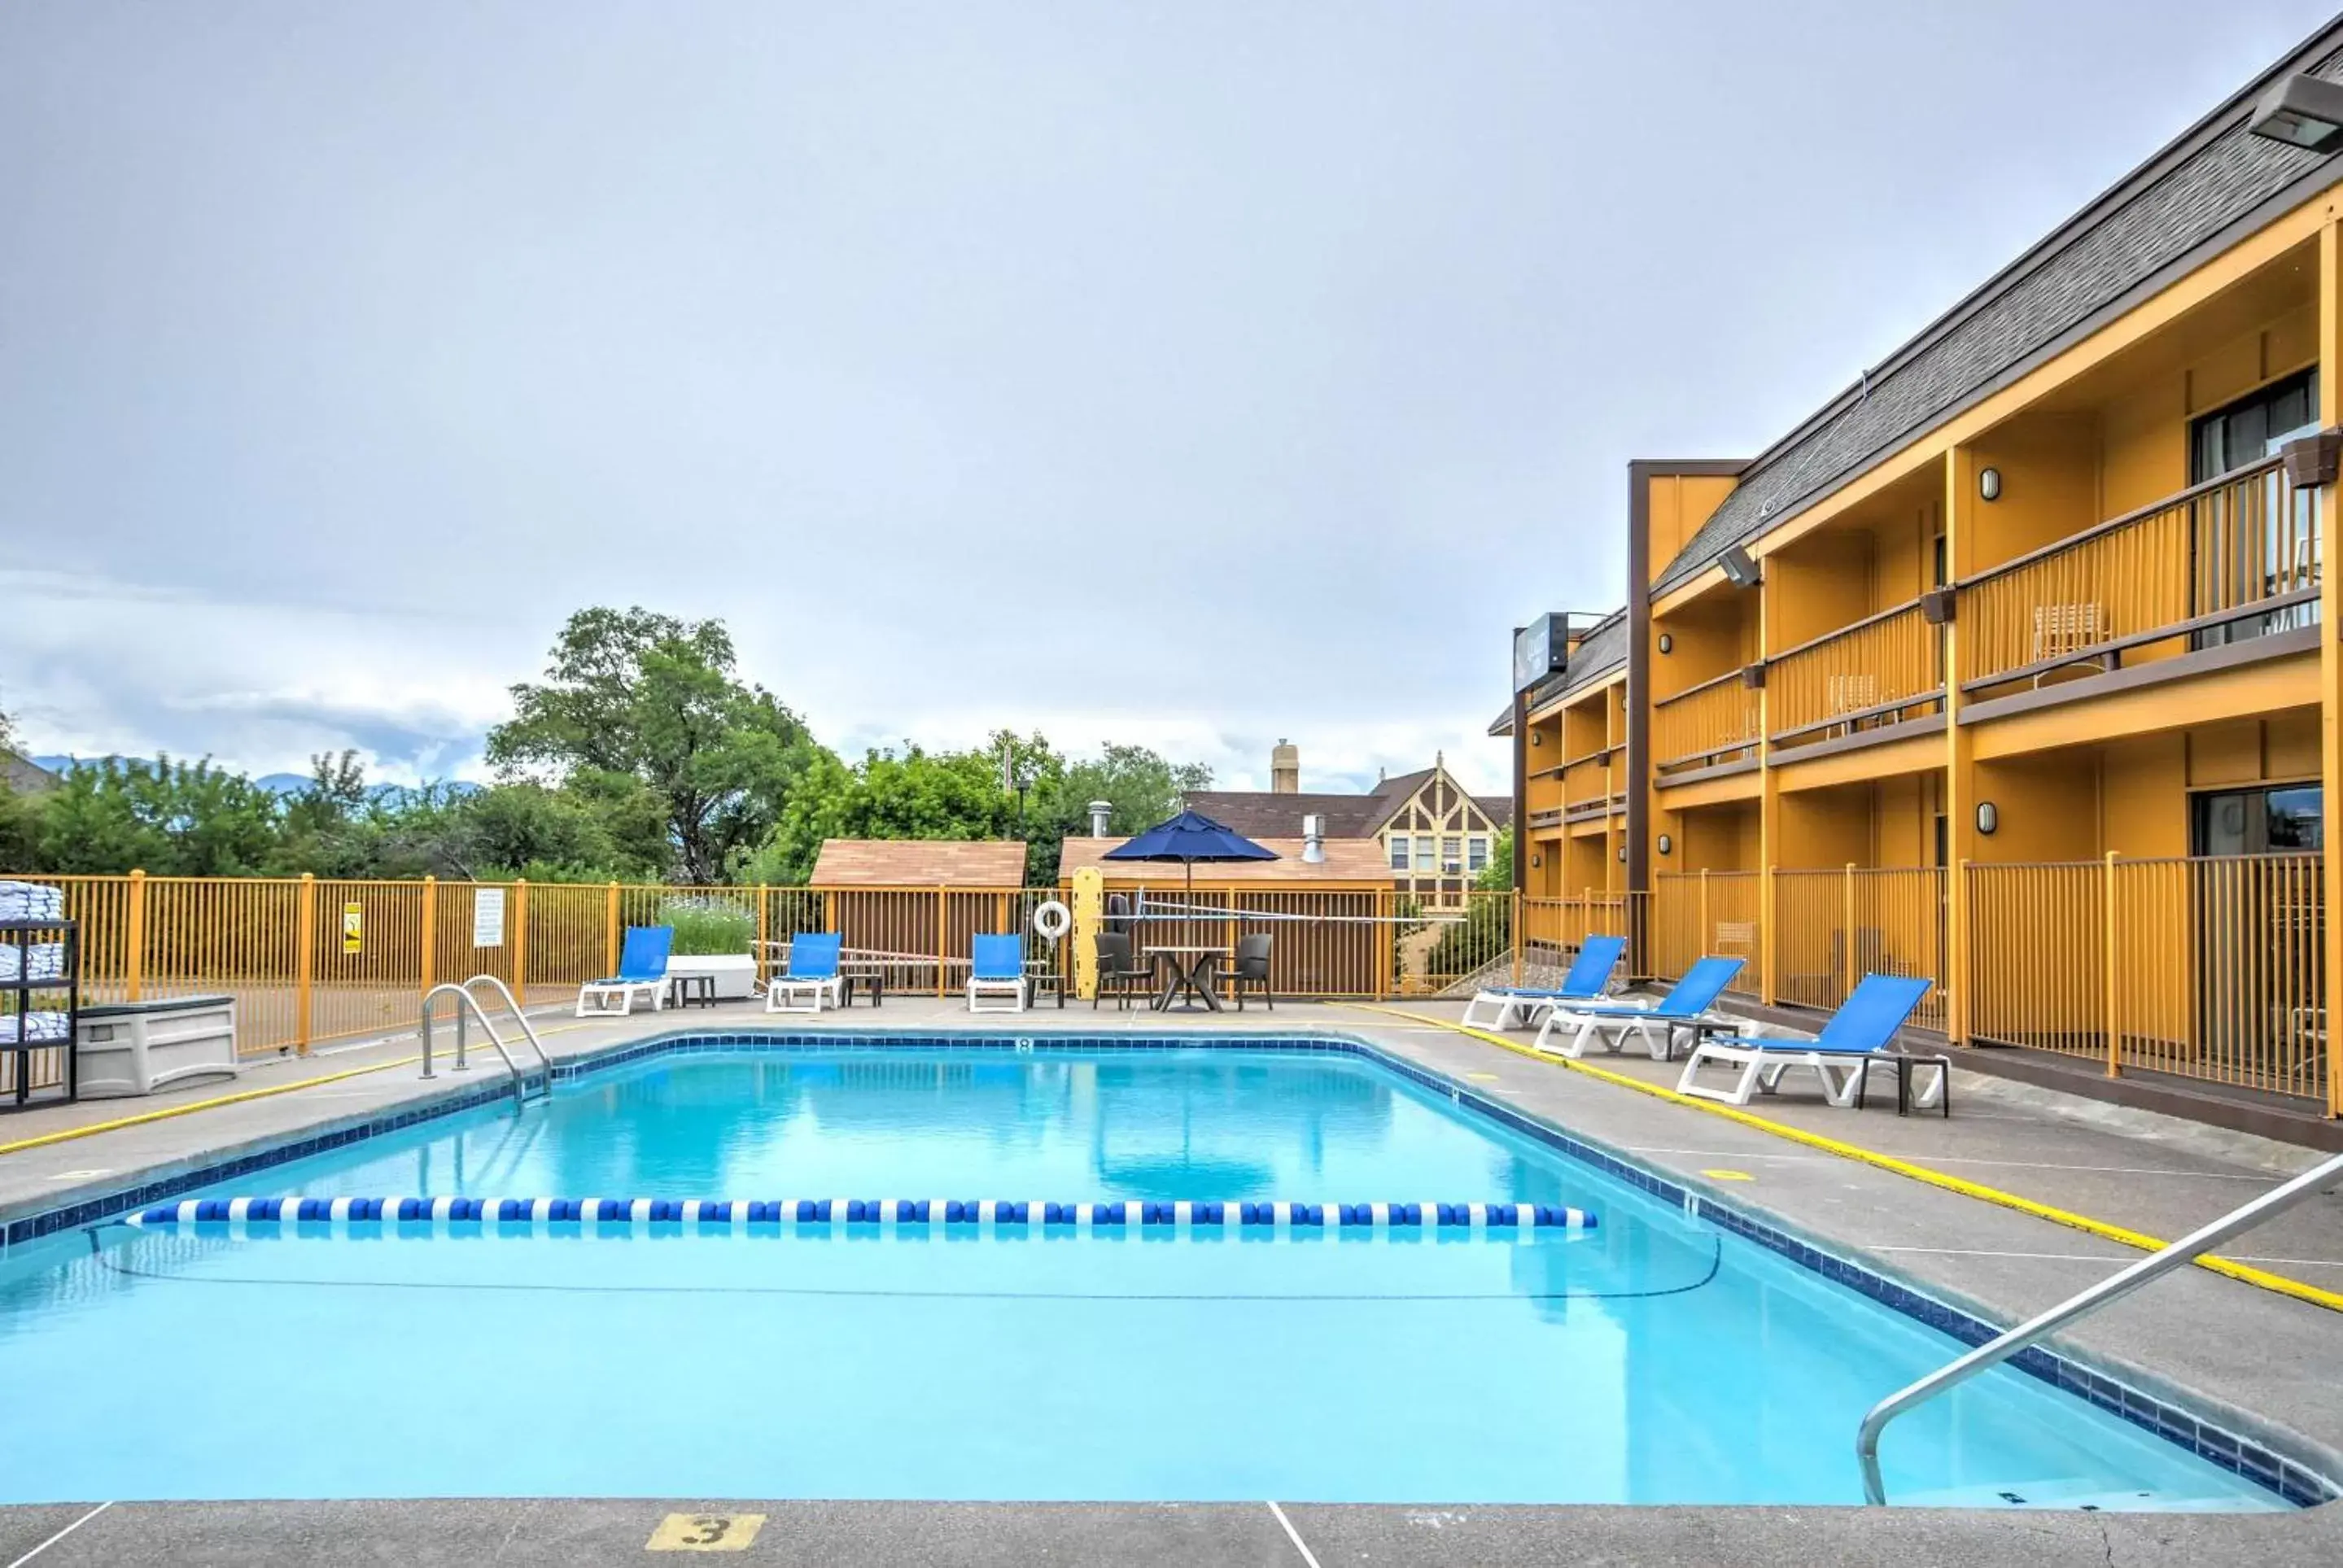 On site, Swimming Pool in Quality Inn Big Sky